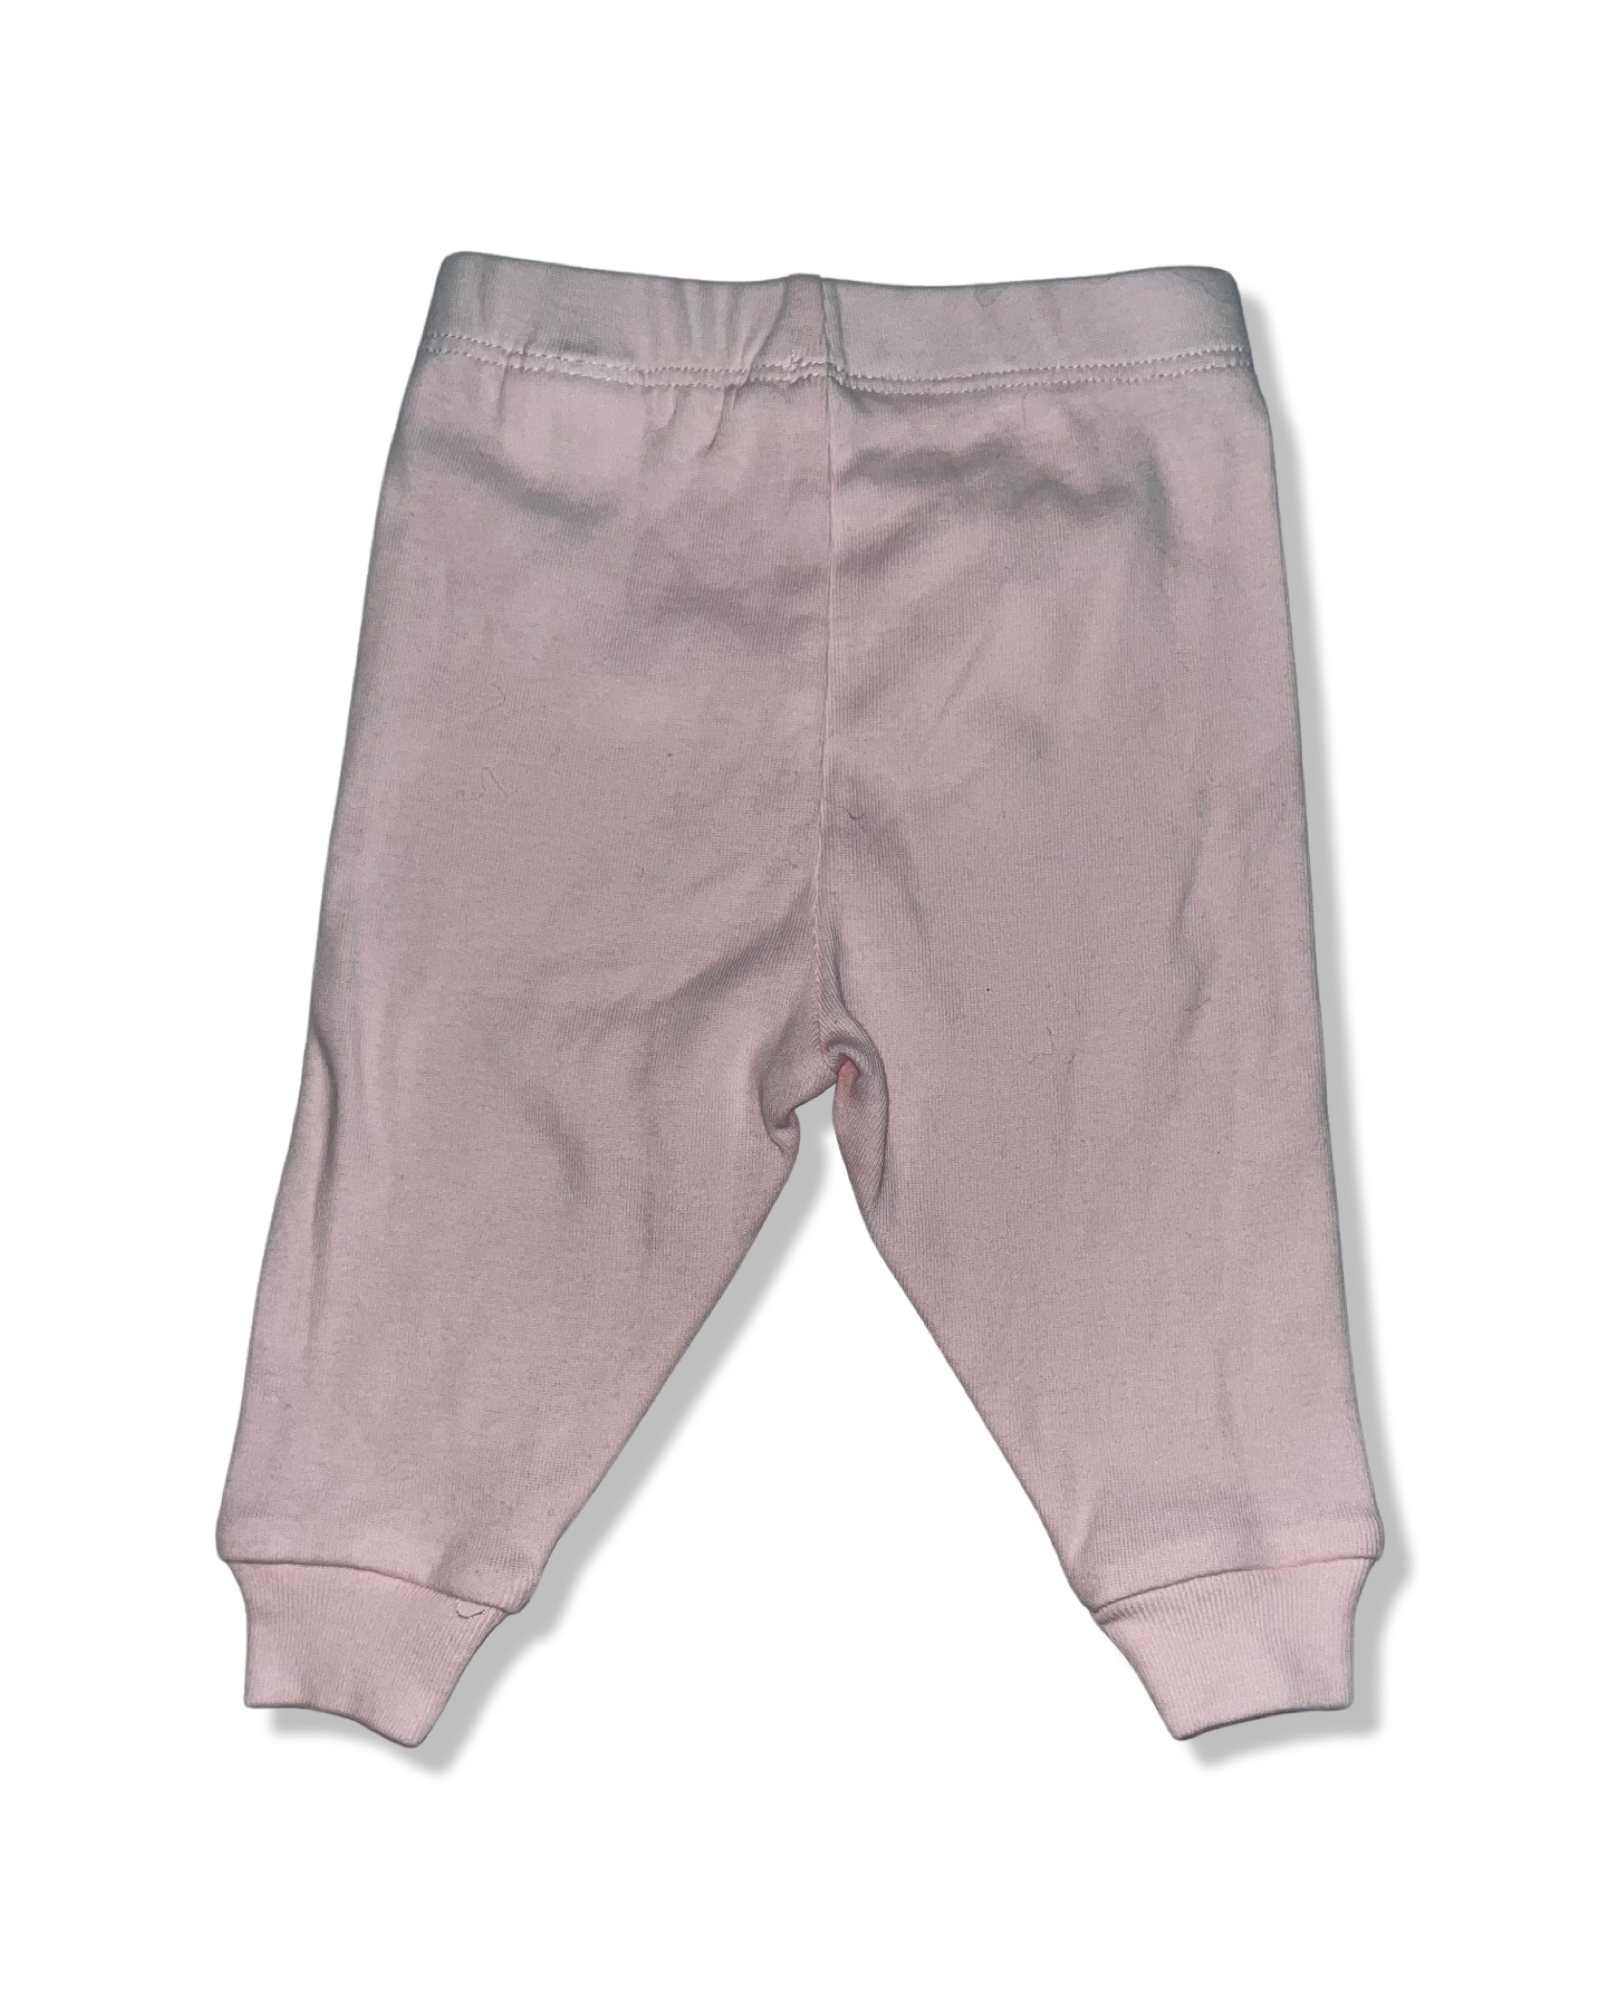 Joe Fresh Light Pink Pants (0-3M)